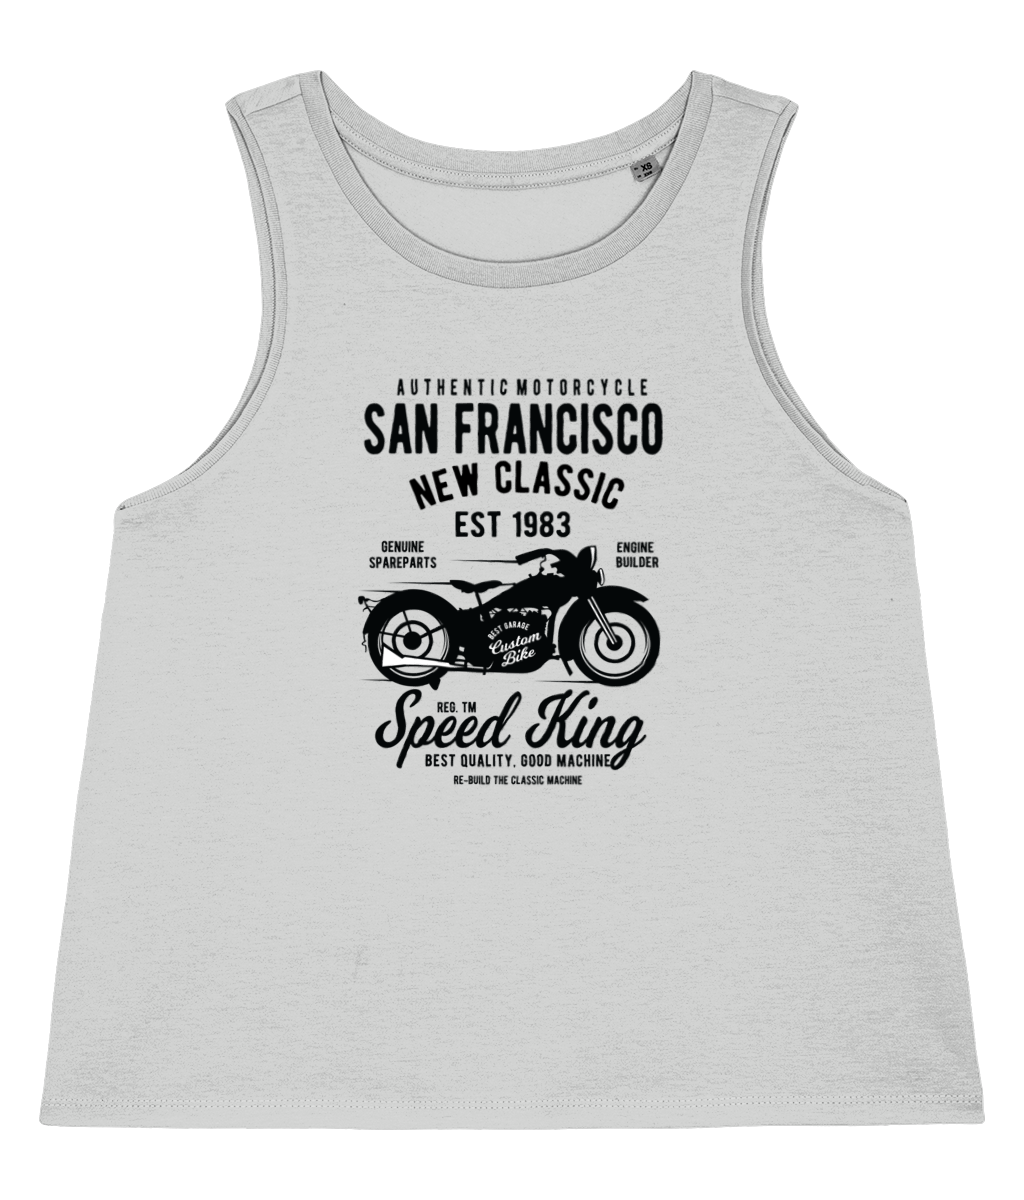 San Francisco Motorcycle – Stella Dancer